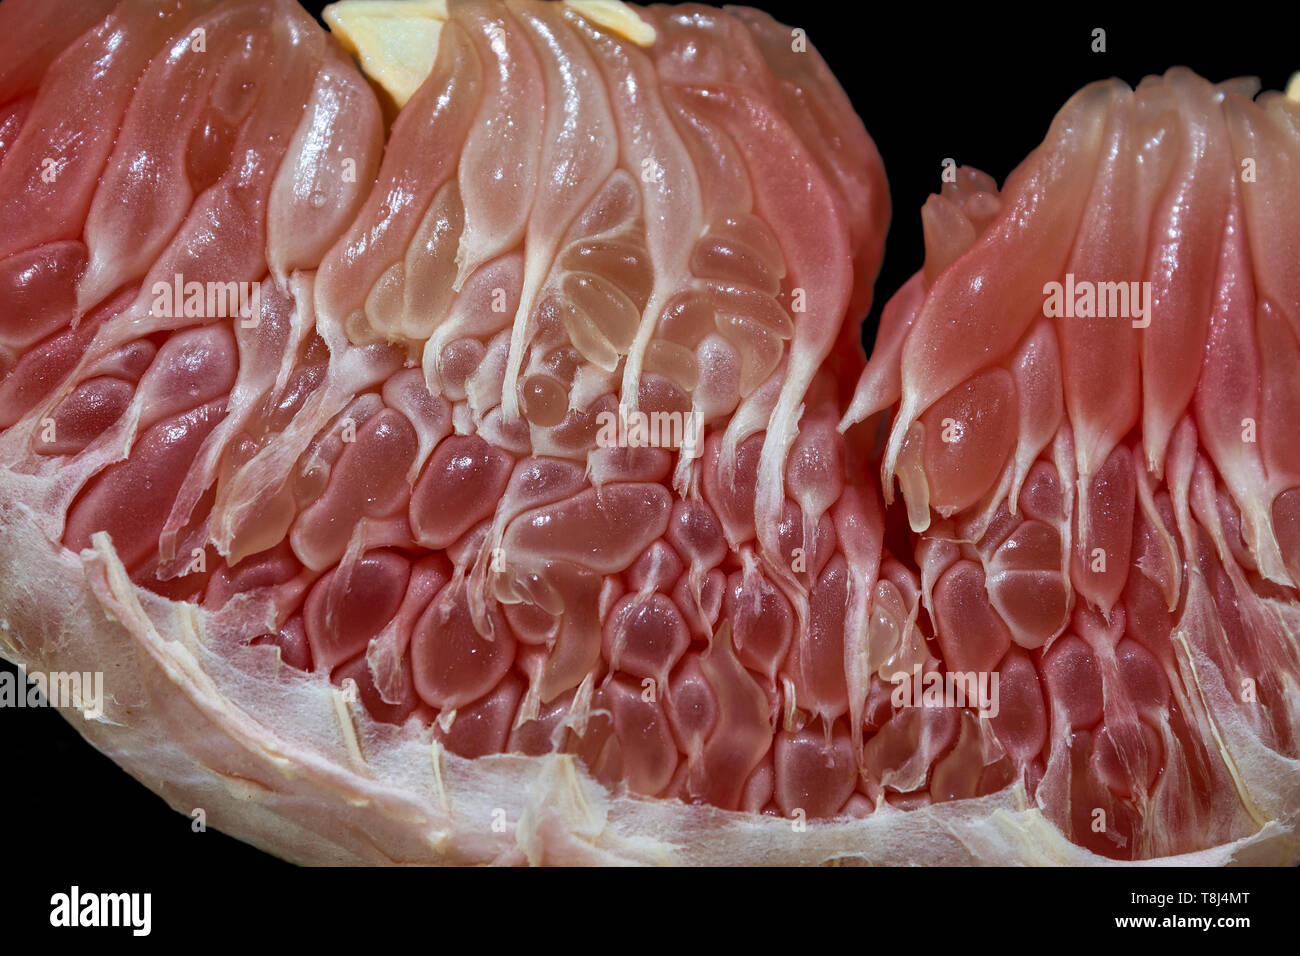 Close-up of a grapefruit segment Stock Photo